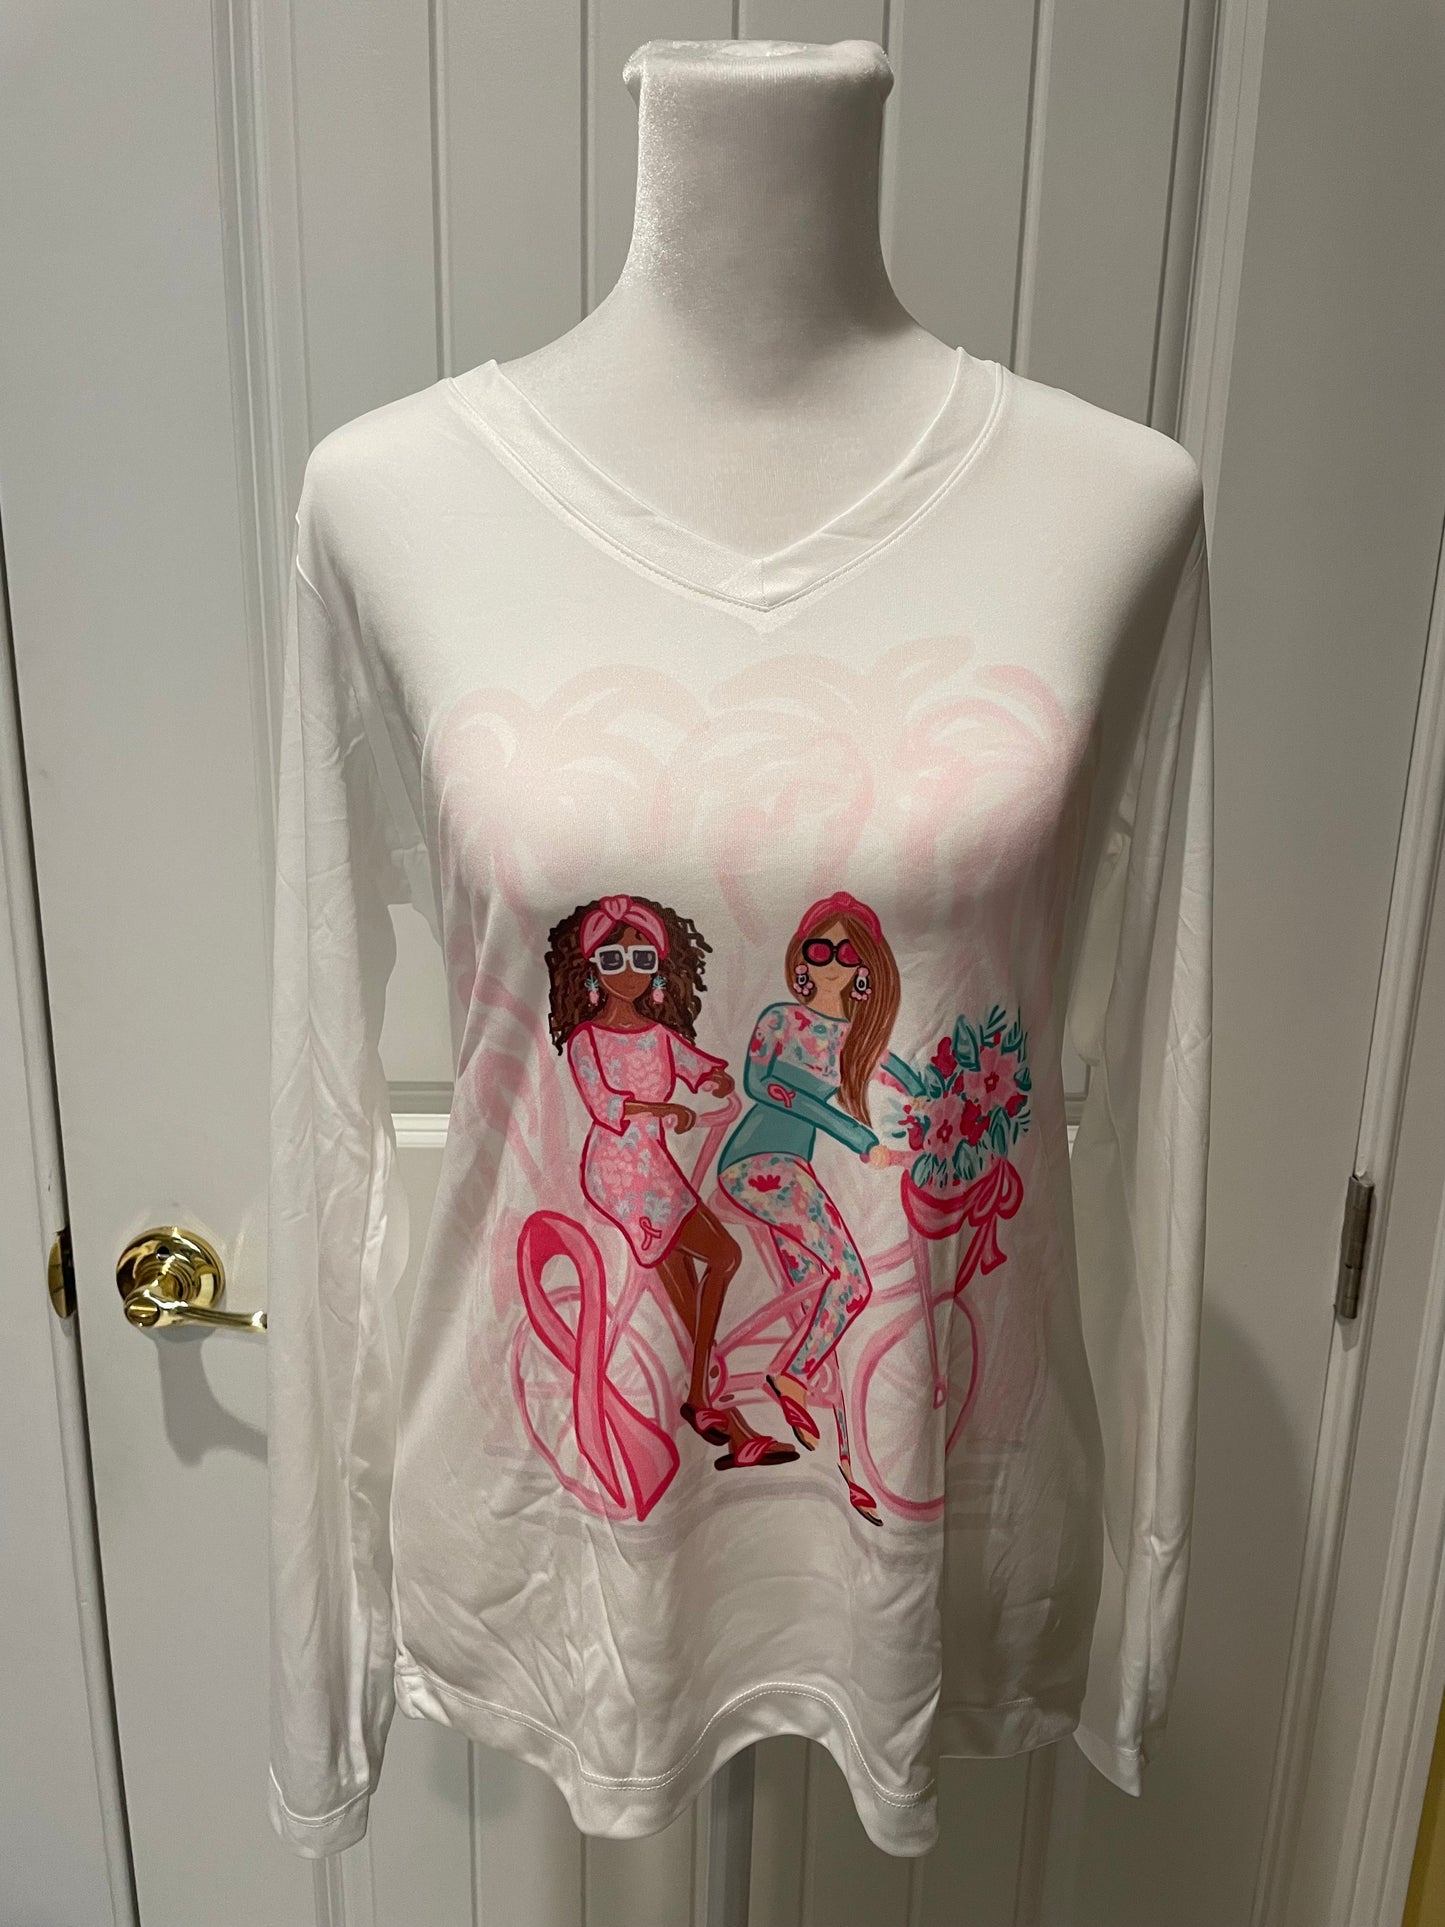 SALE! "Pinktober" Breast Cancer Illustration Shirts